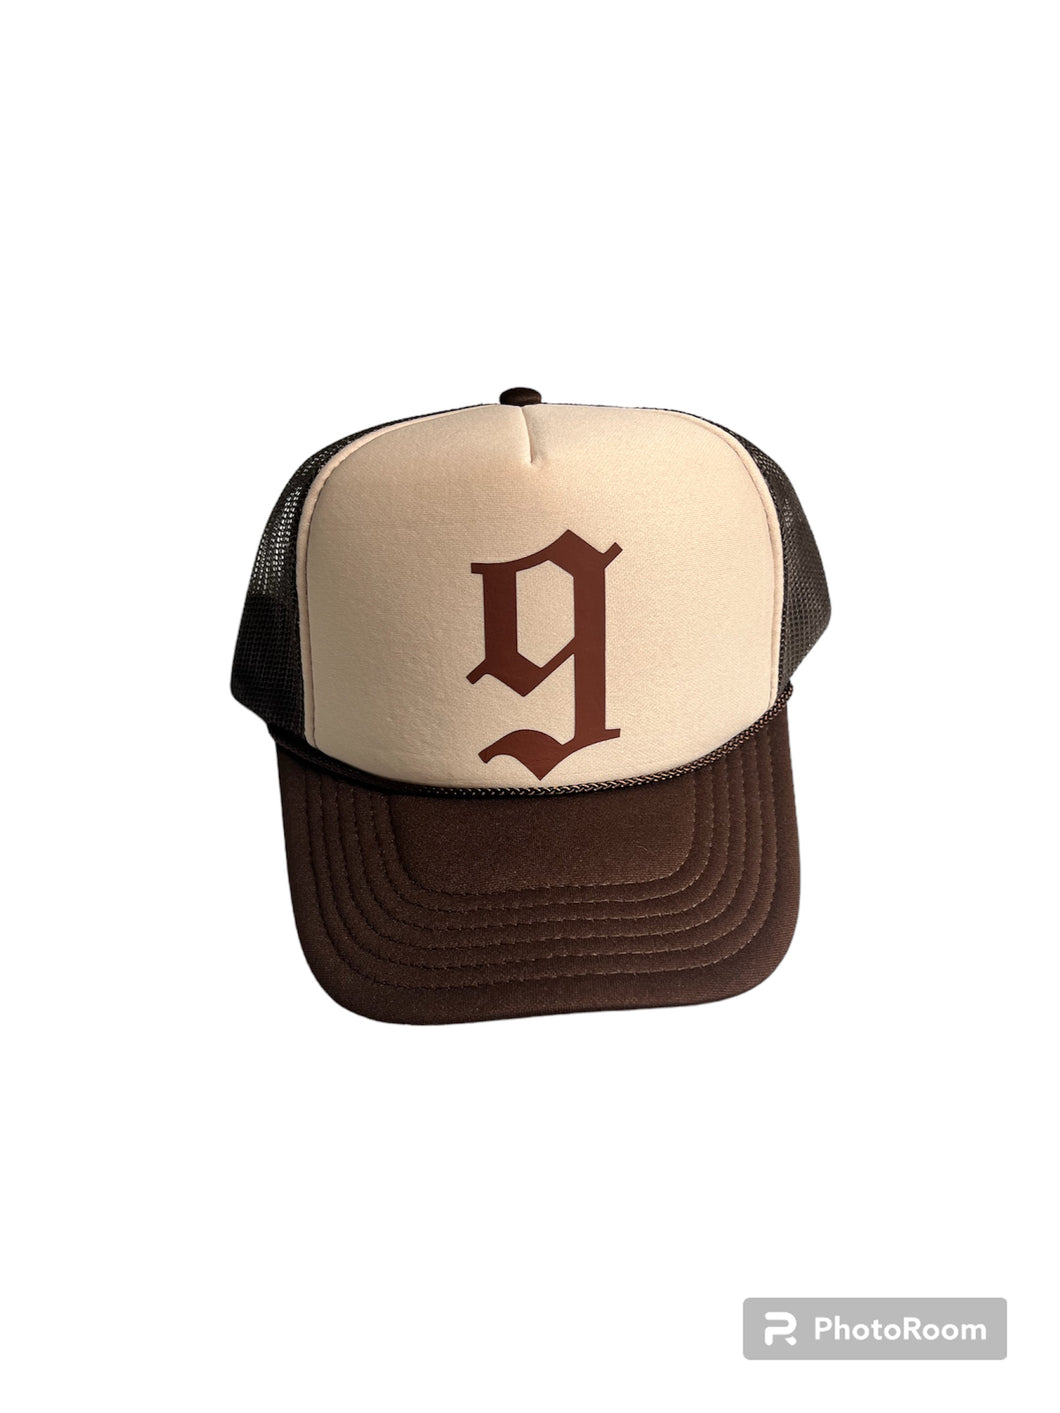 9 Trucker Hat (Brown/Light Brown)